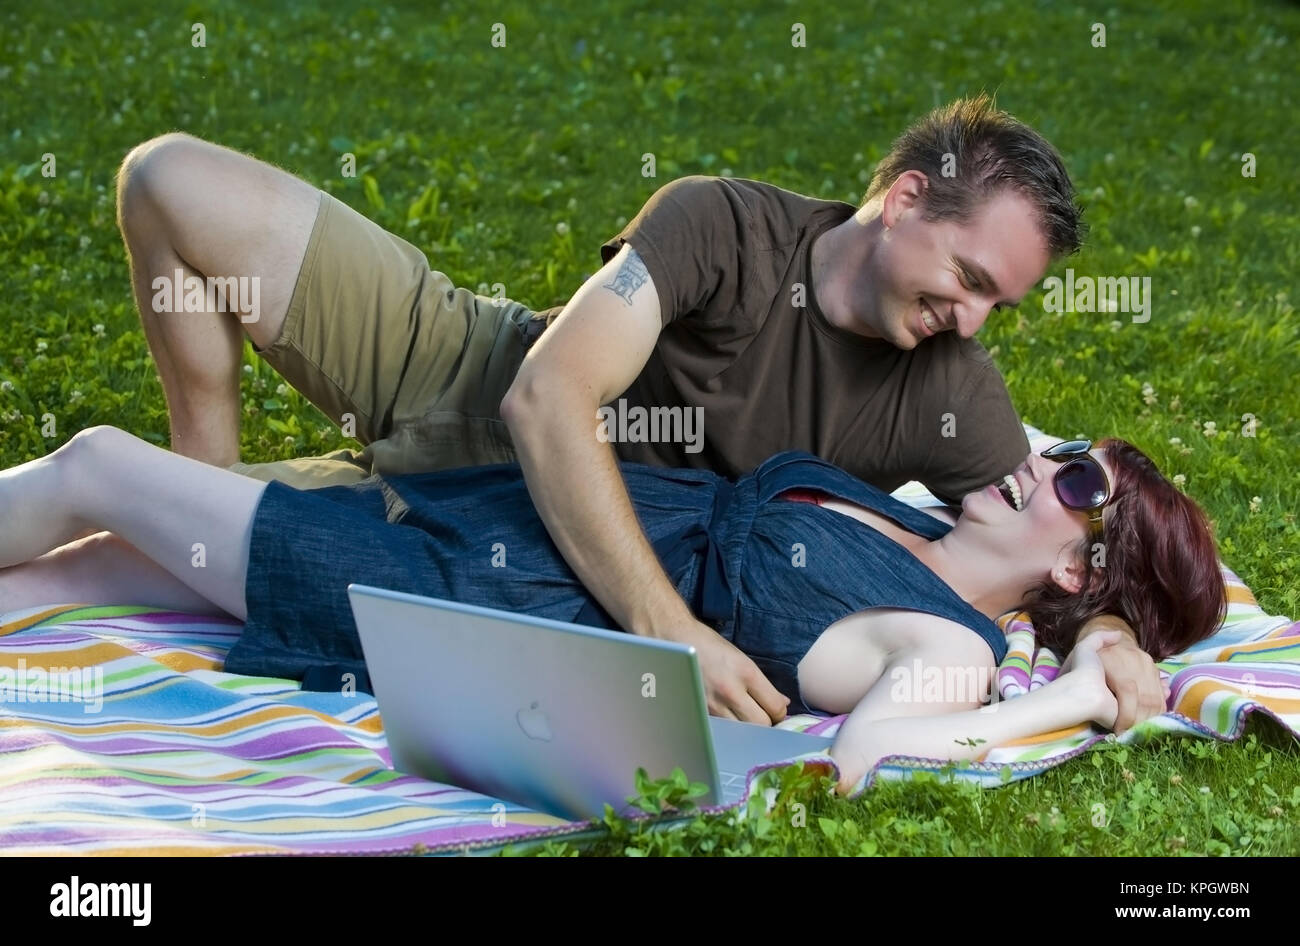 Model released , Junges Paar liegt mit Laptop auf einer Decke in der Wiese - couple with laptop lying in meadow Stock Photo